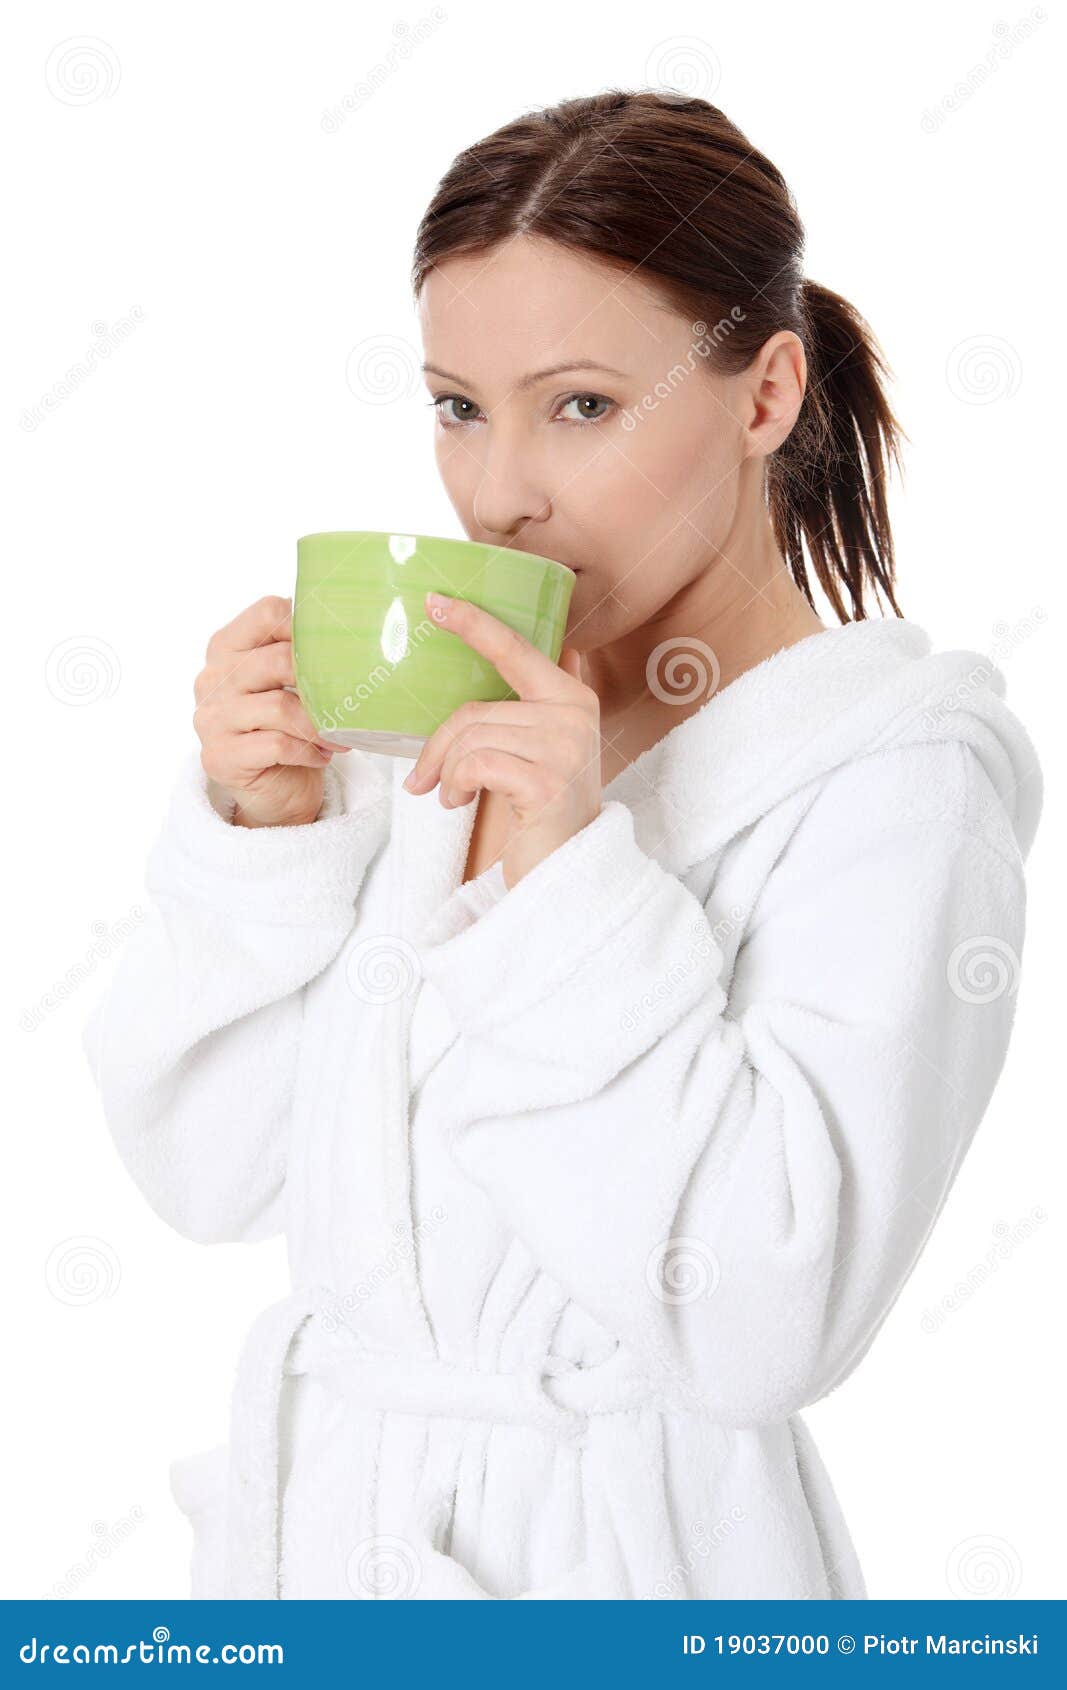 Mature Lady In Bathrobe Drinking From Mug Stock Photo - Image: 19037000